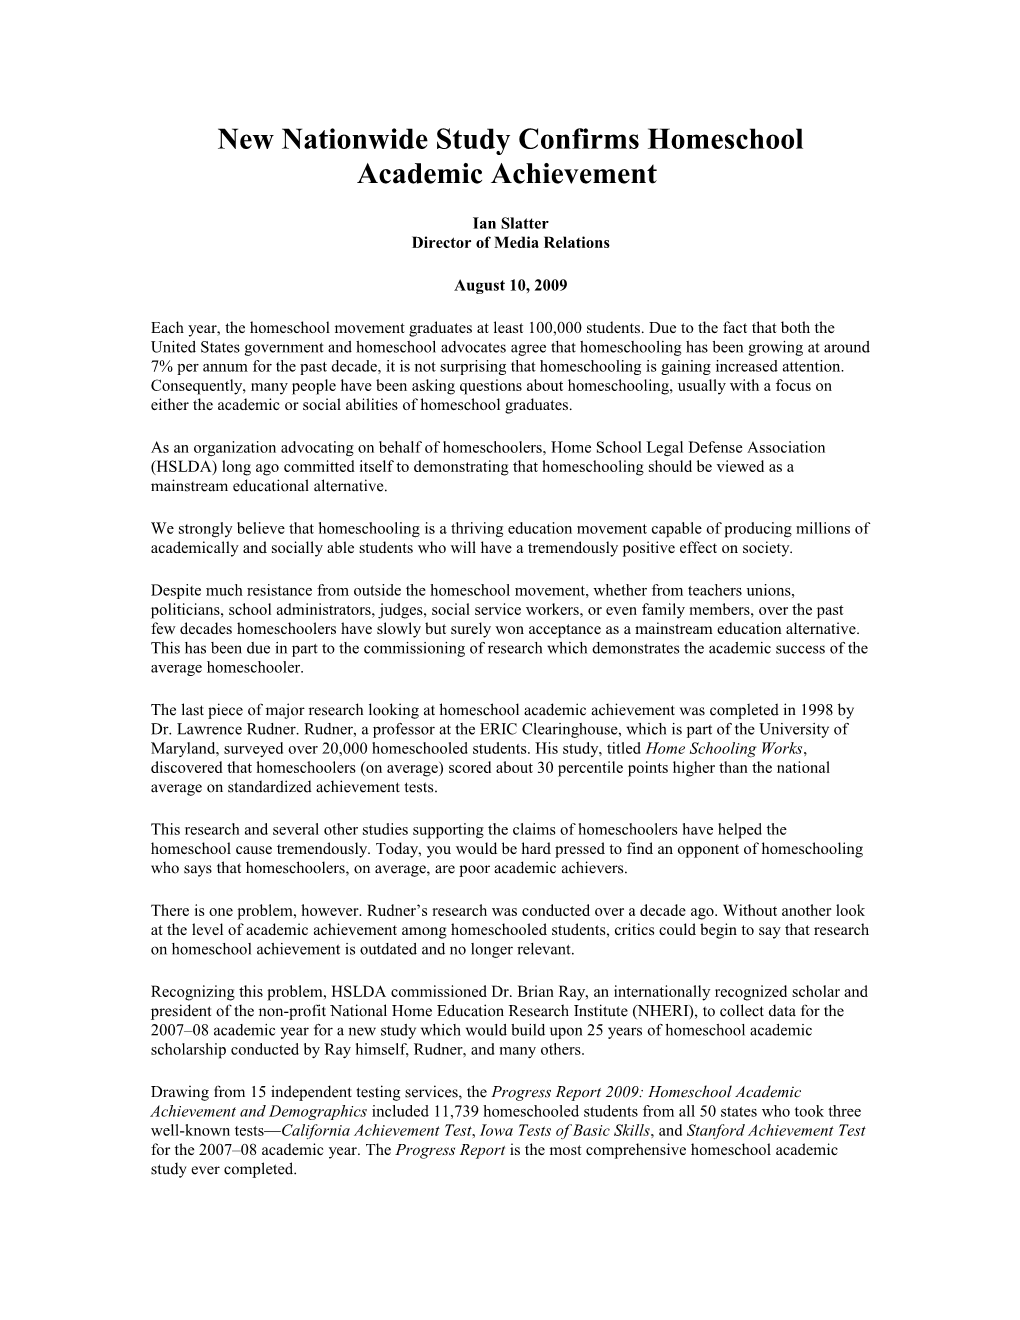 New Nationwide Study Confirms Homeschool Academic Achievement